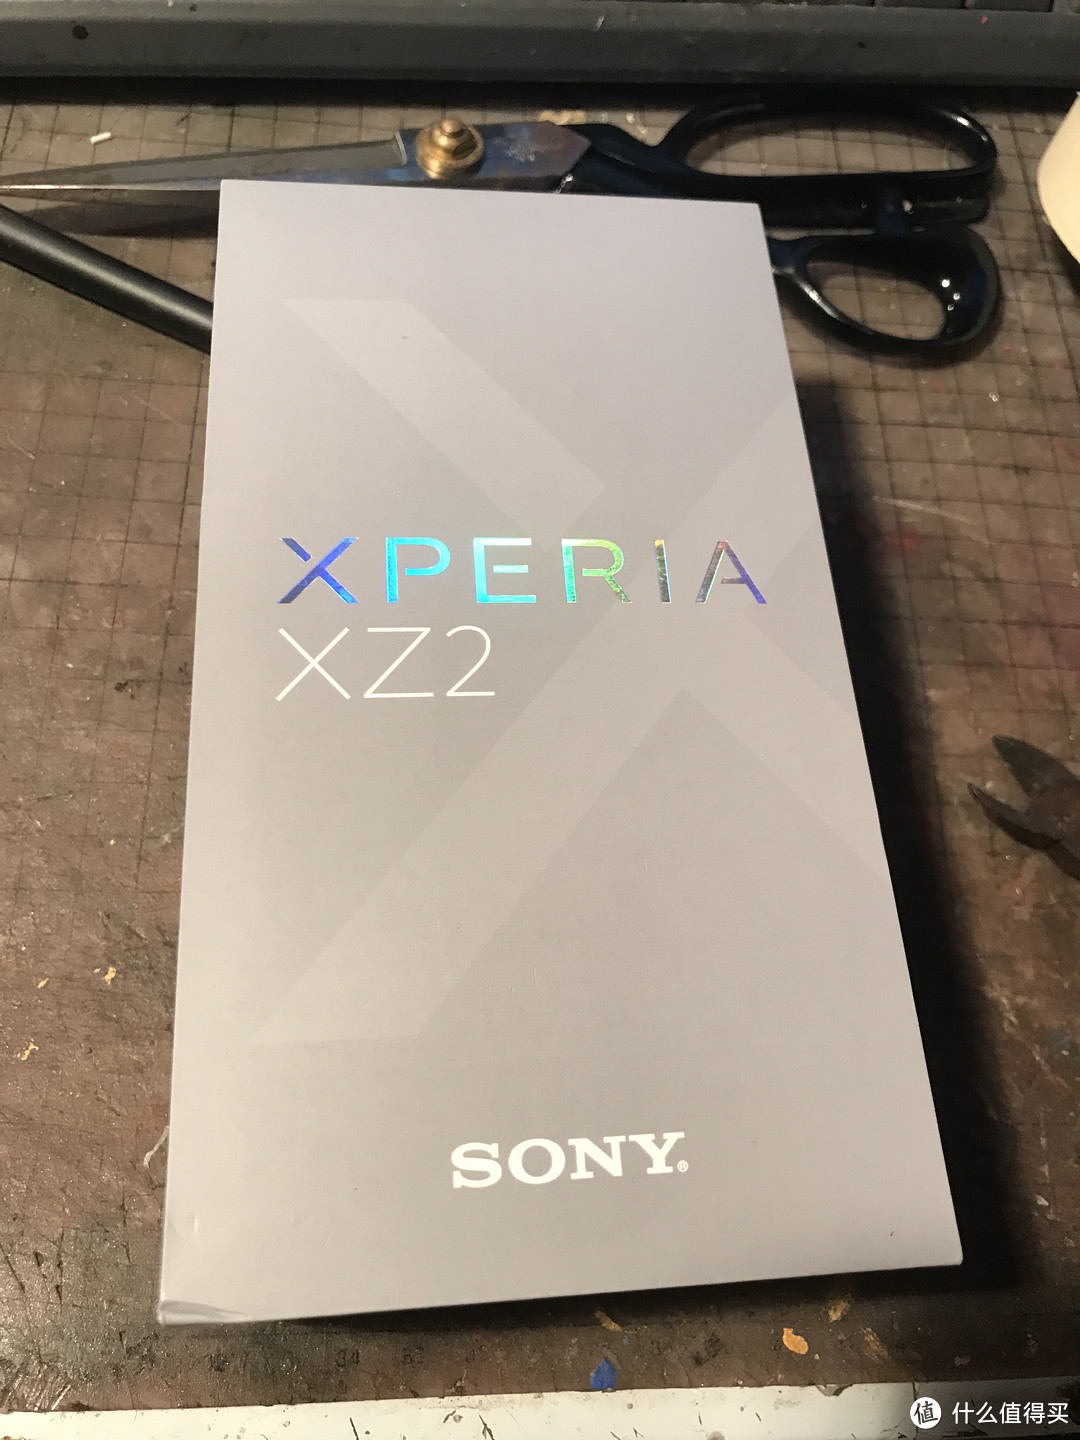 Sony 索尼 xperia xz2 智能手机 静谧黑 开箱